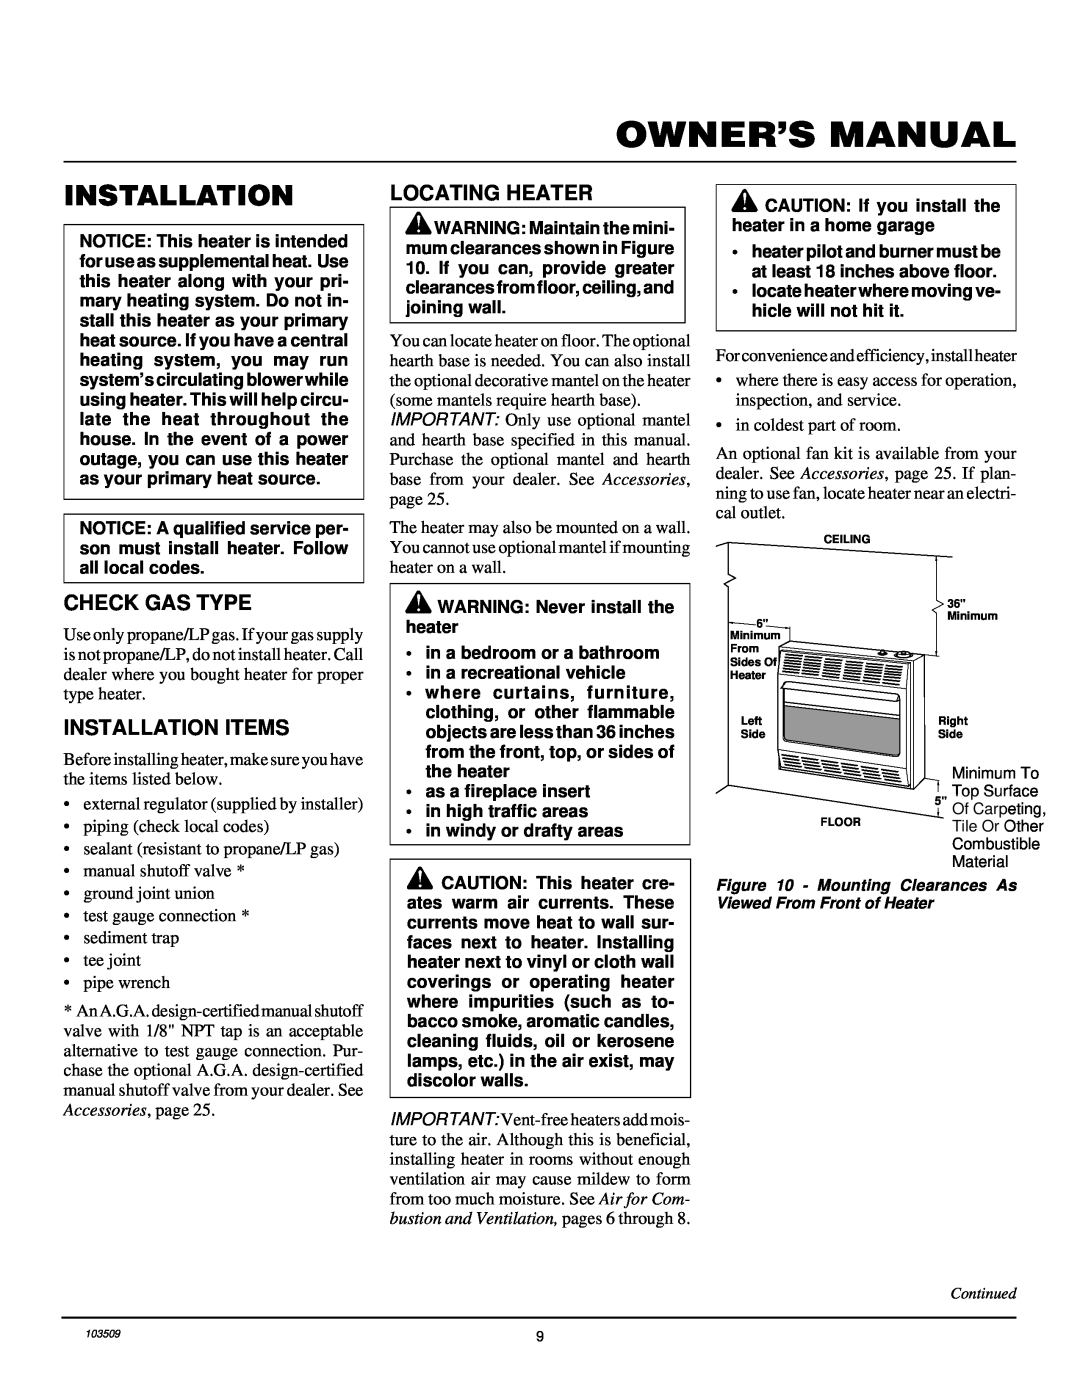 Desa Tech RFP28TC installation manual Locating Heater, Check Gas Type, Installation Items 